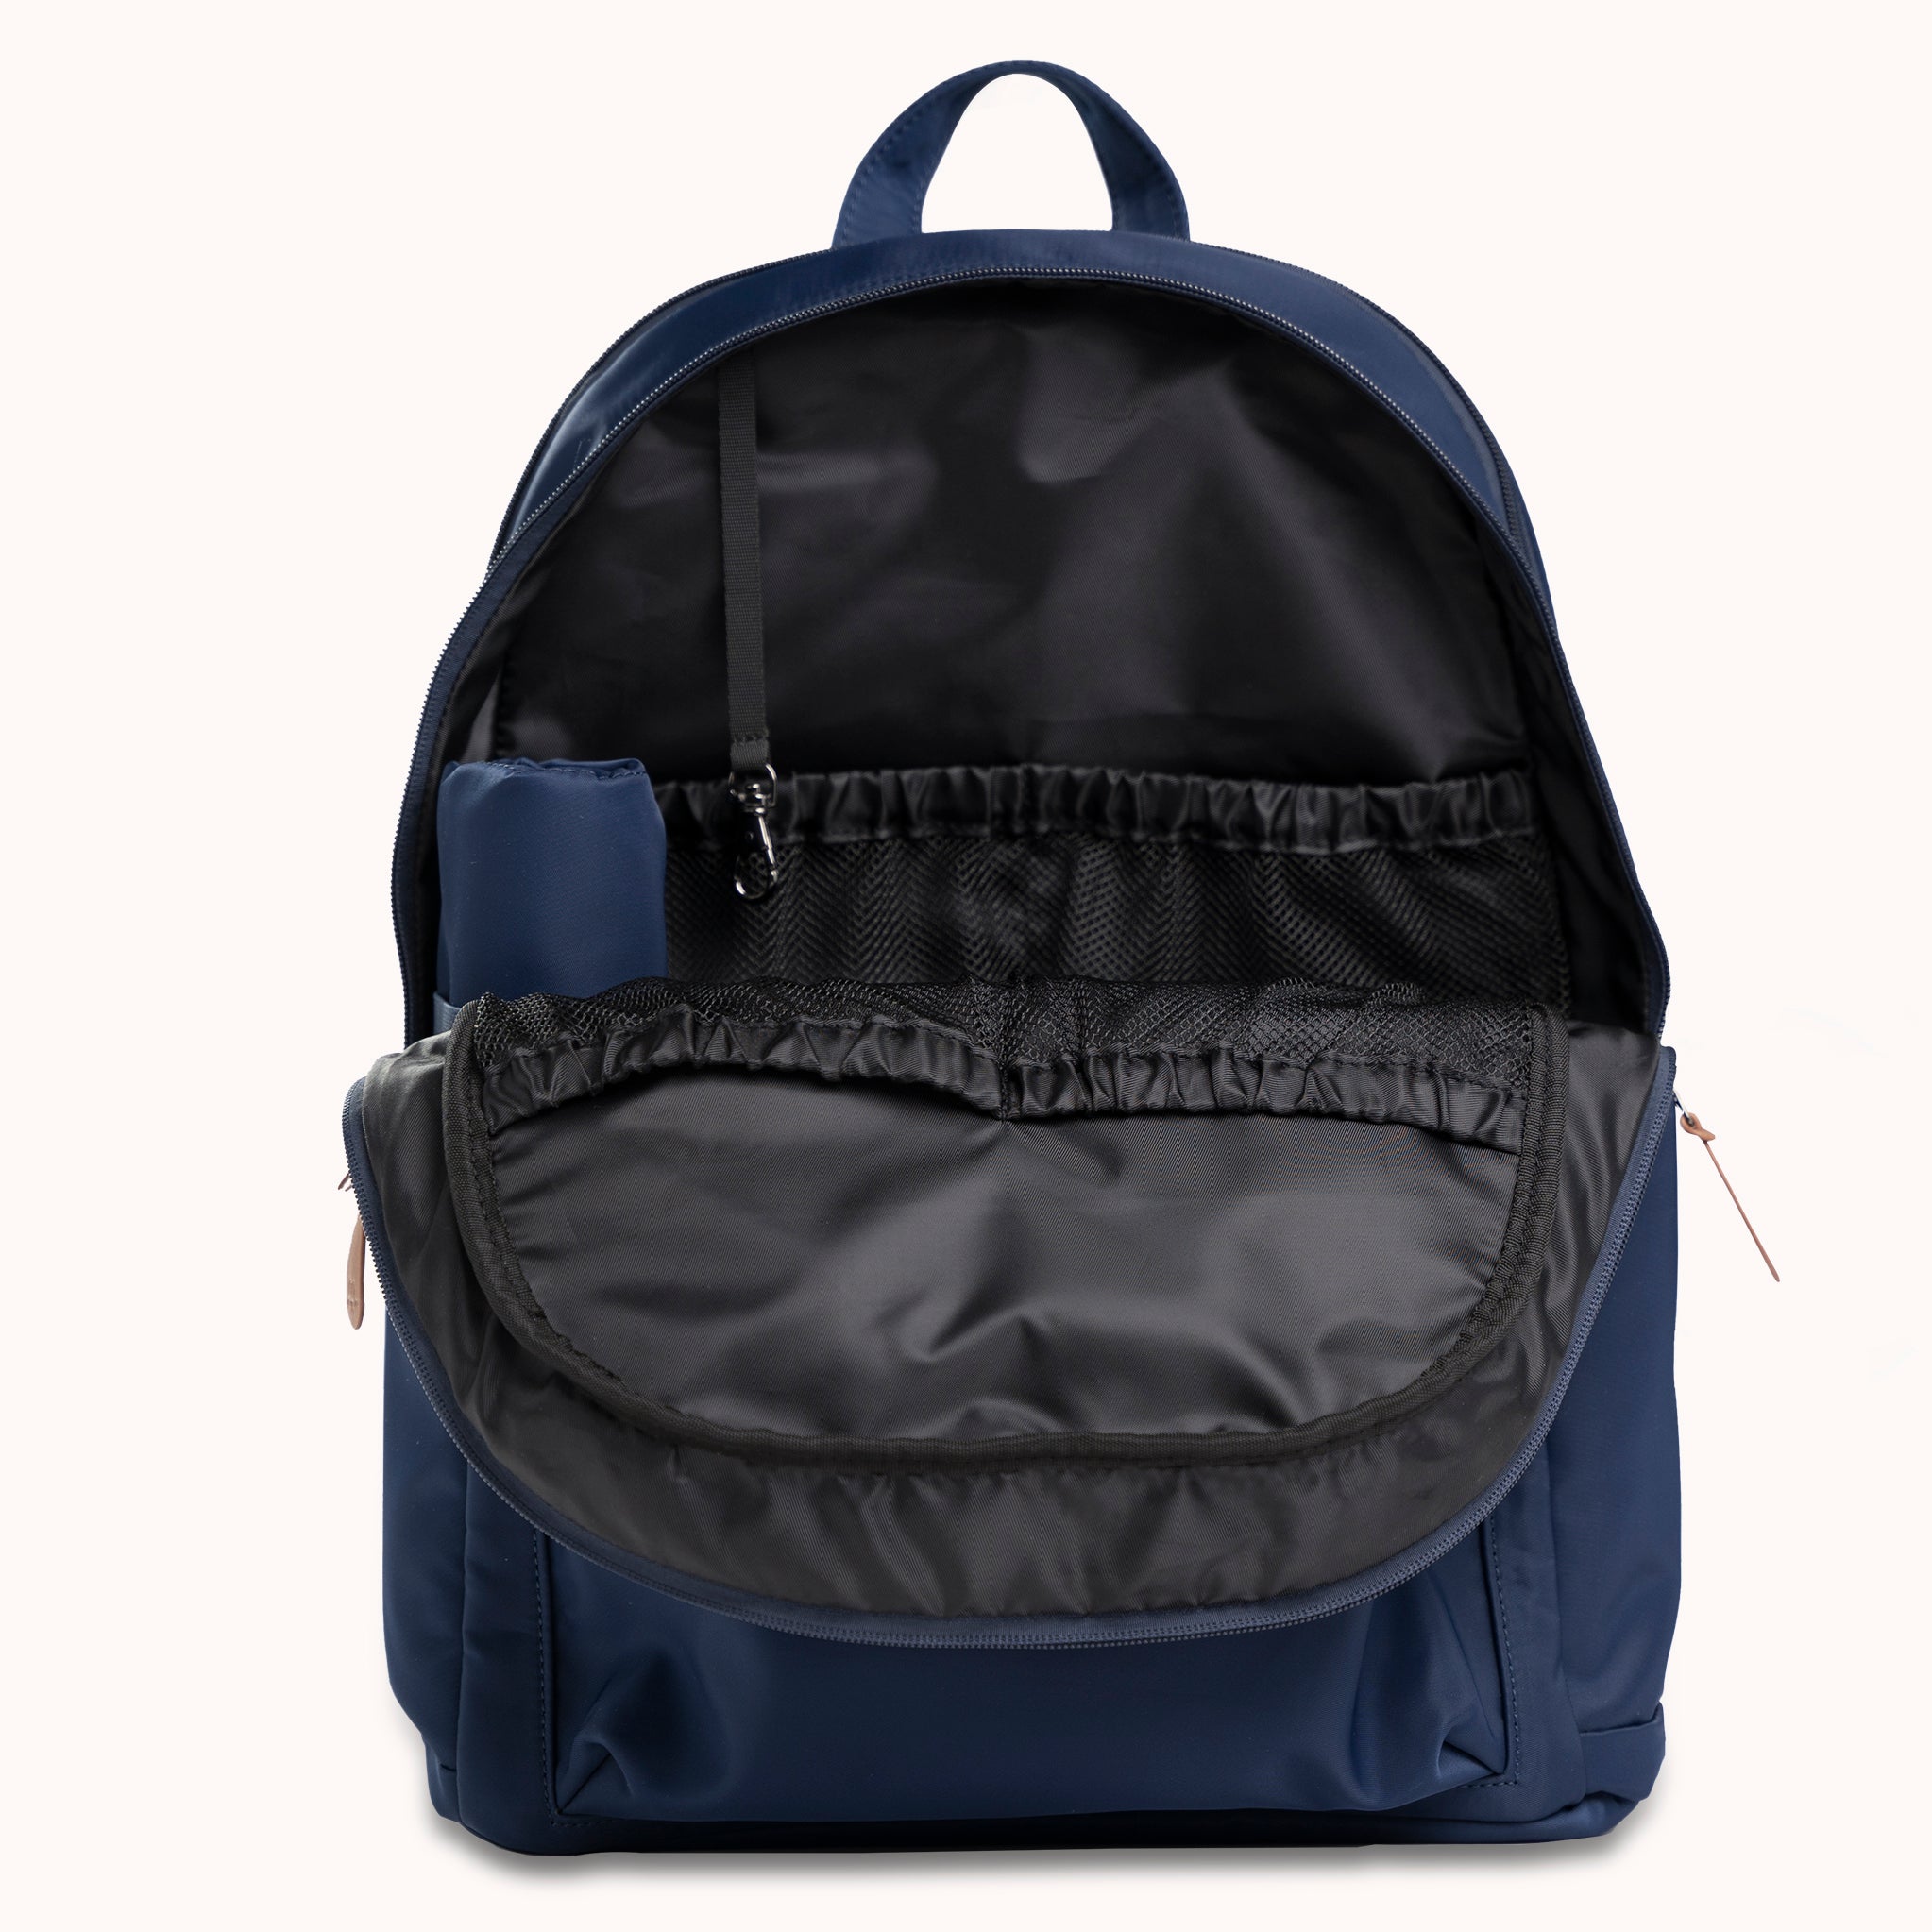 Diaper Backpack in Blue - Natemia